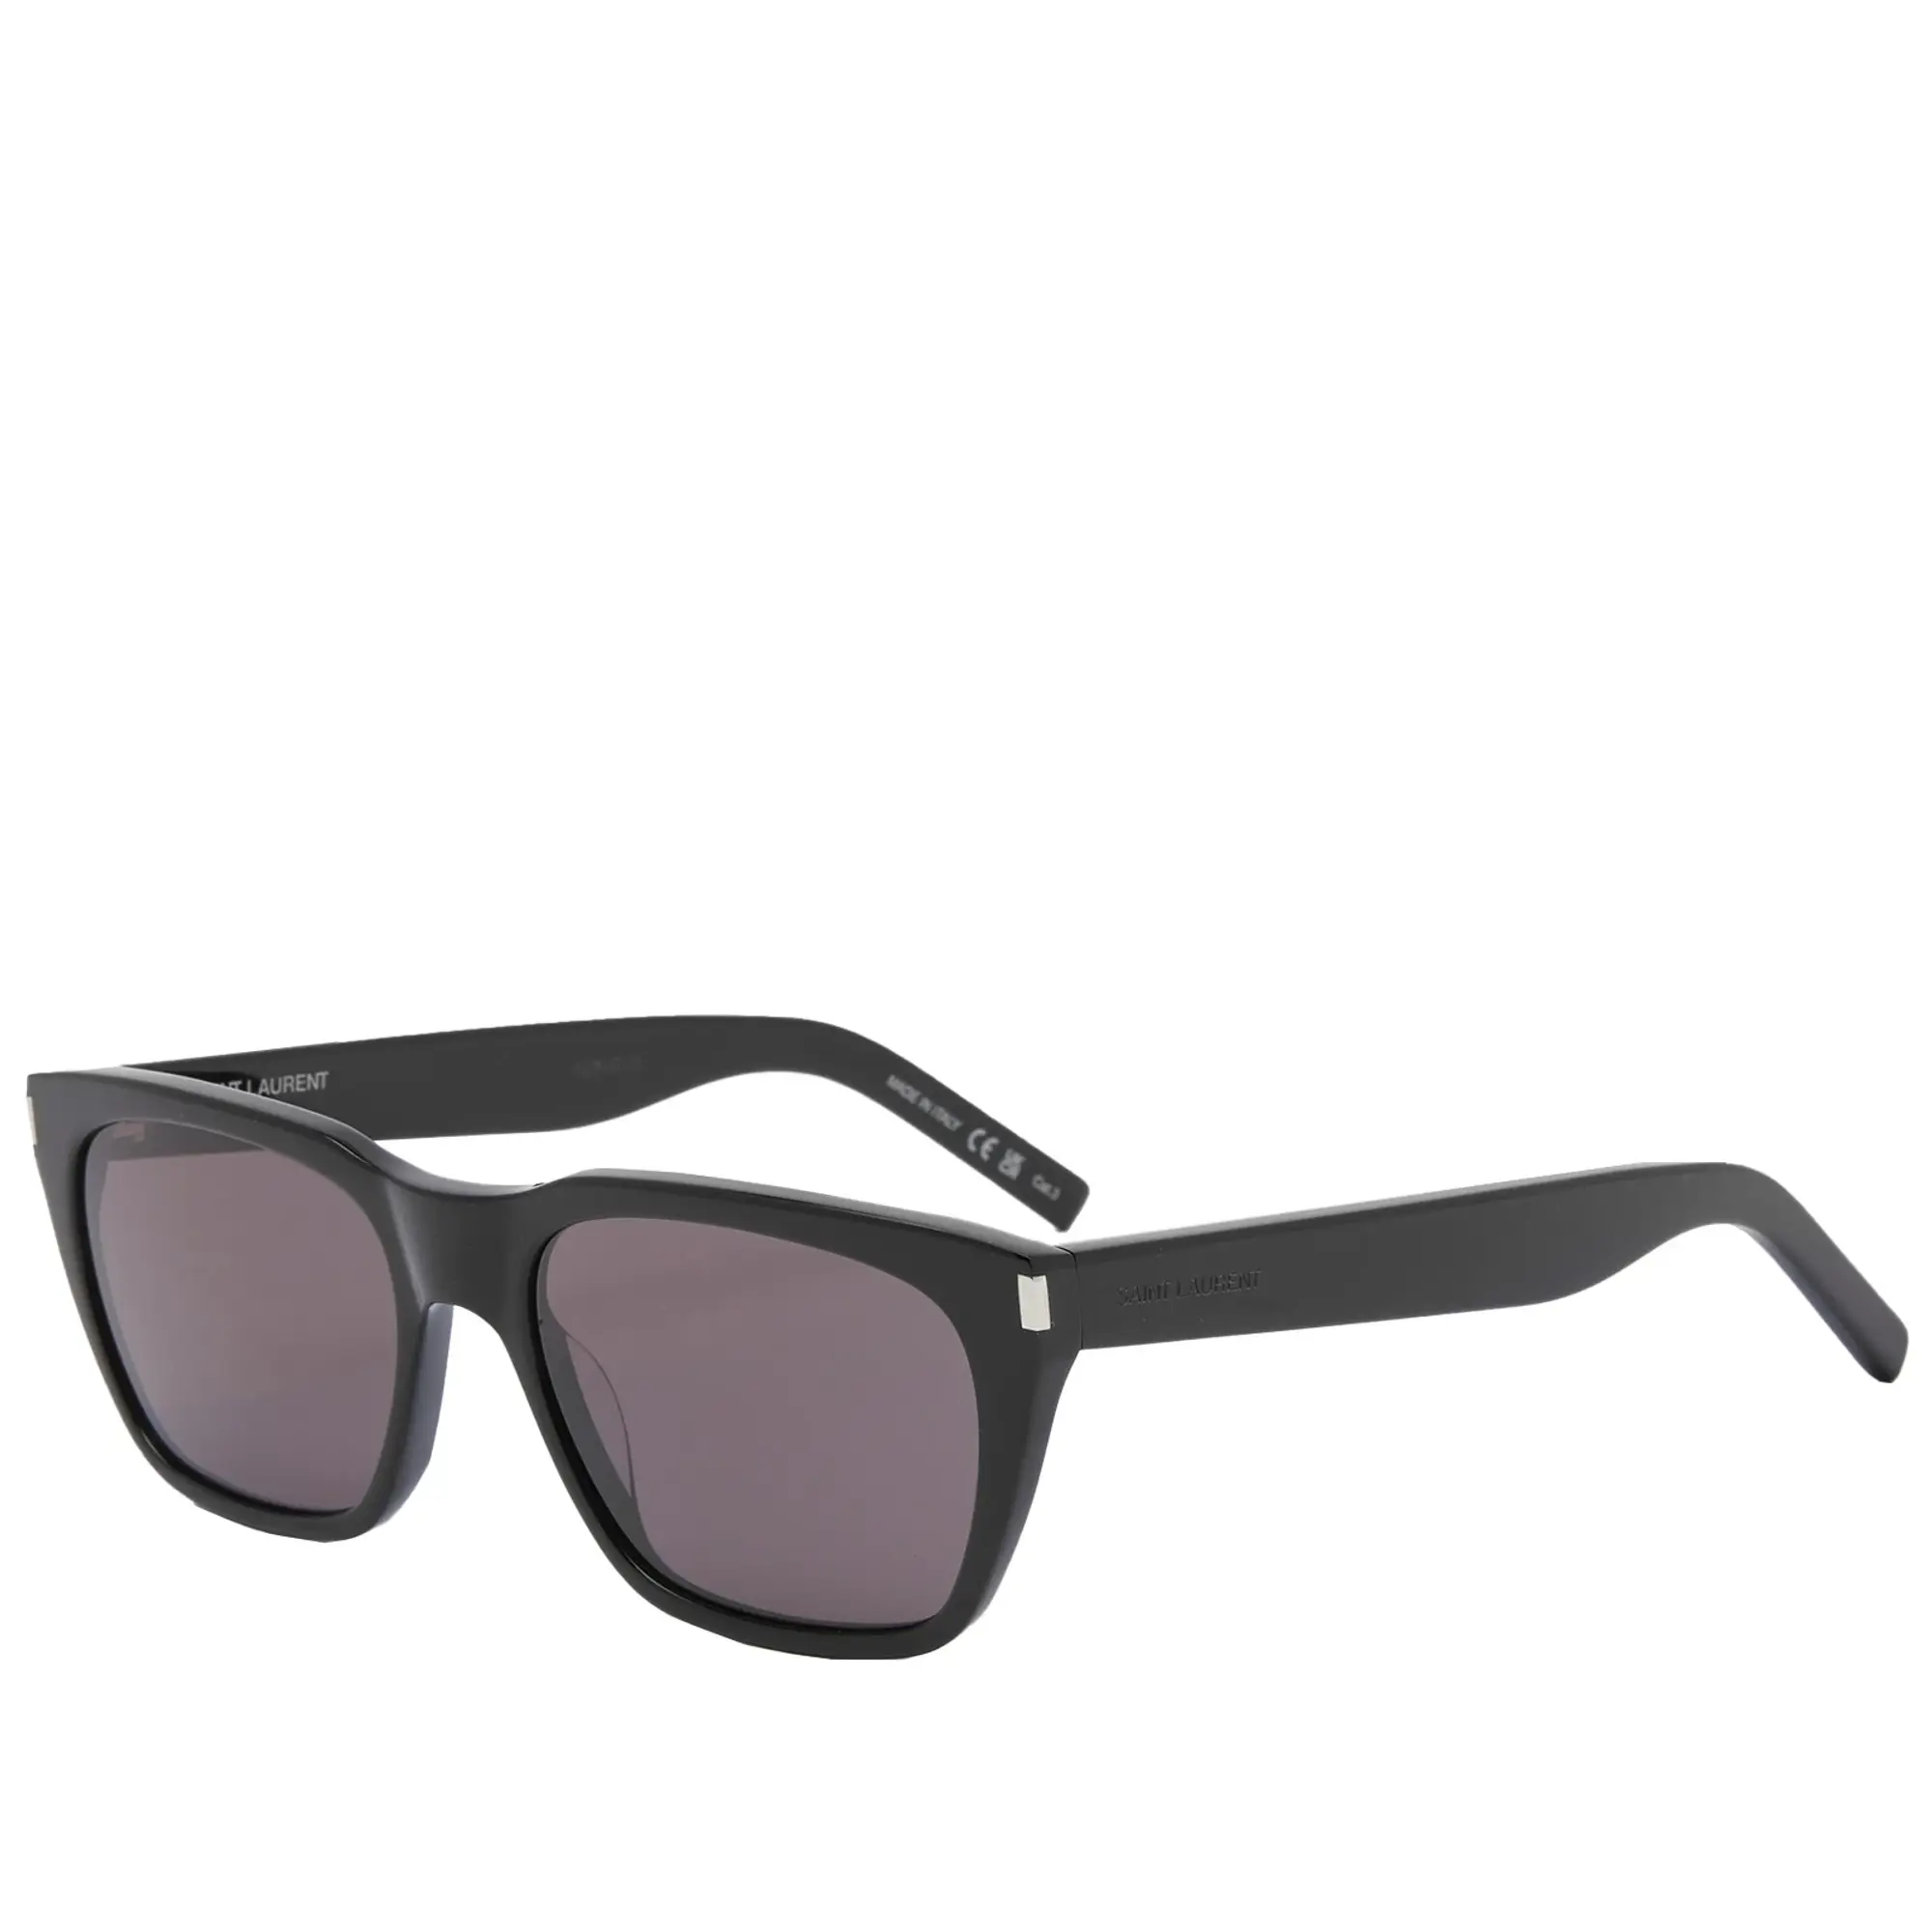 Saint Laurent Men's SL 598 Sunglasses Black